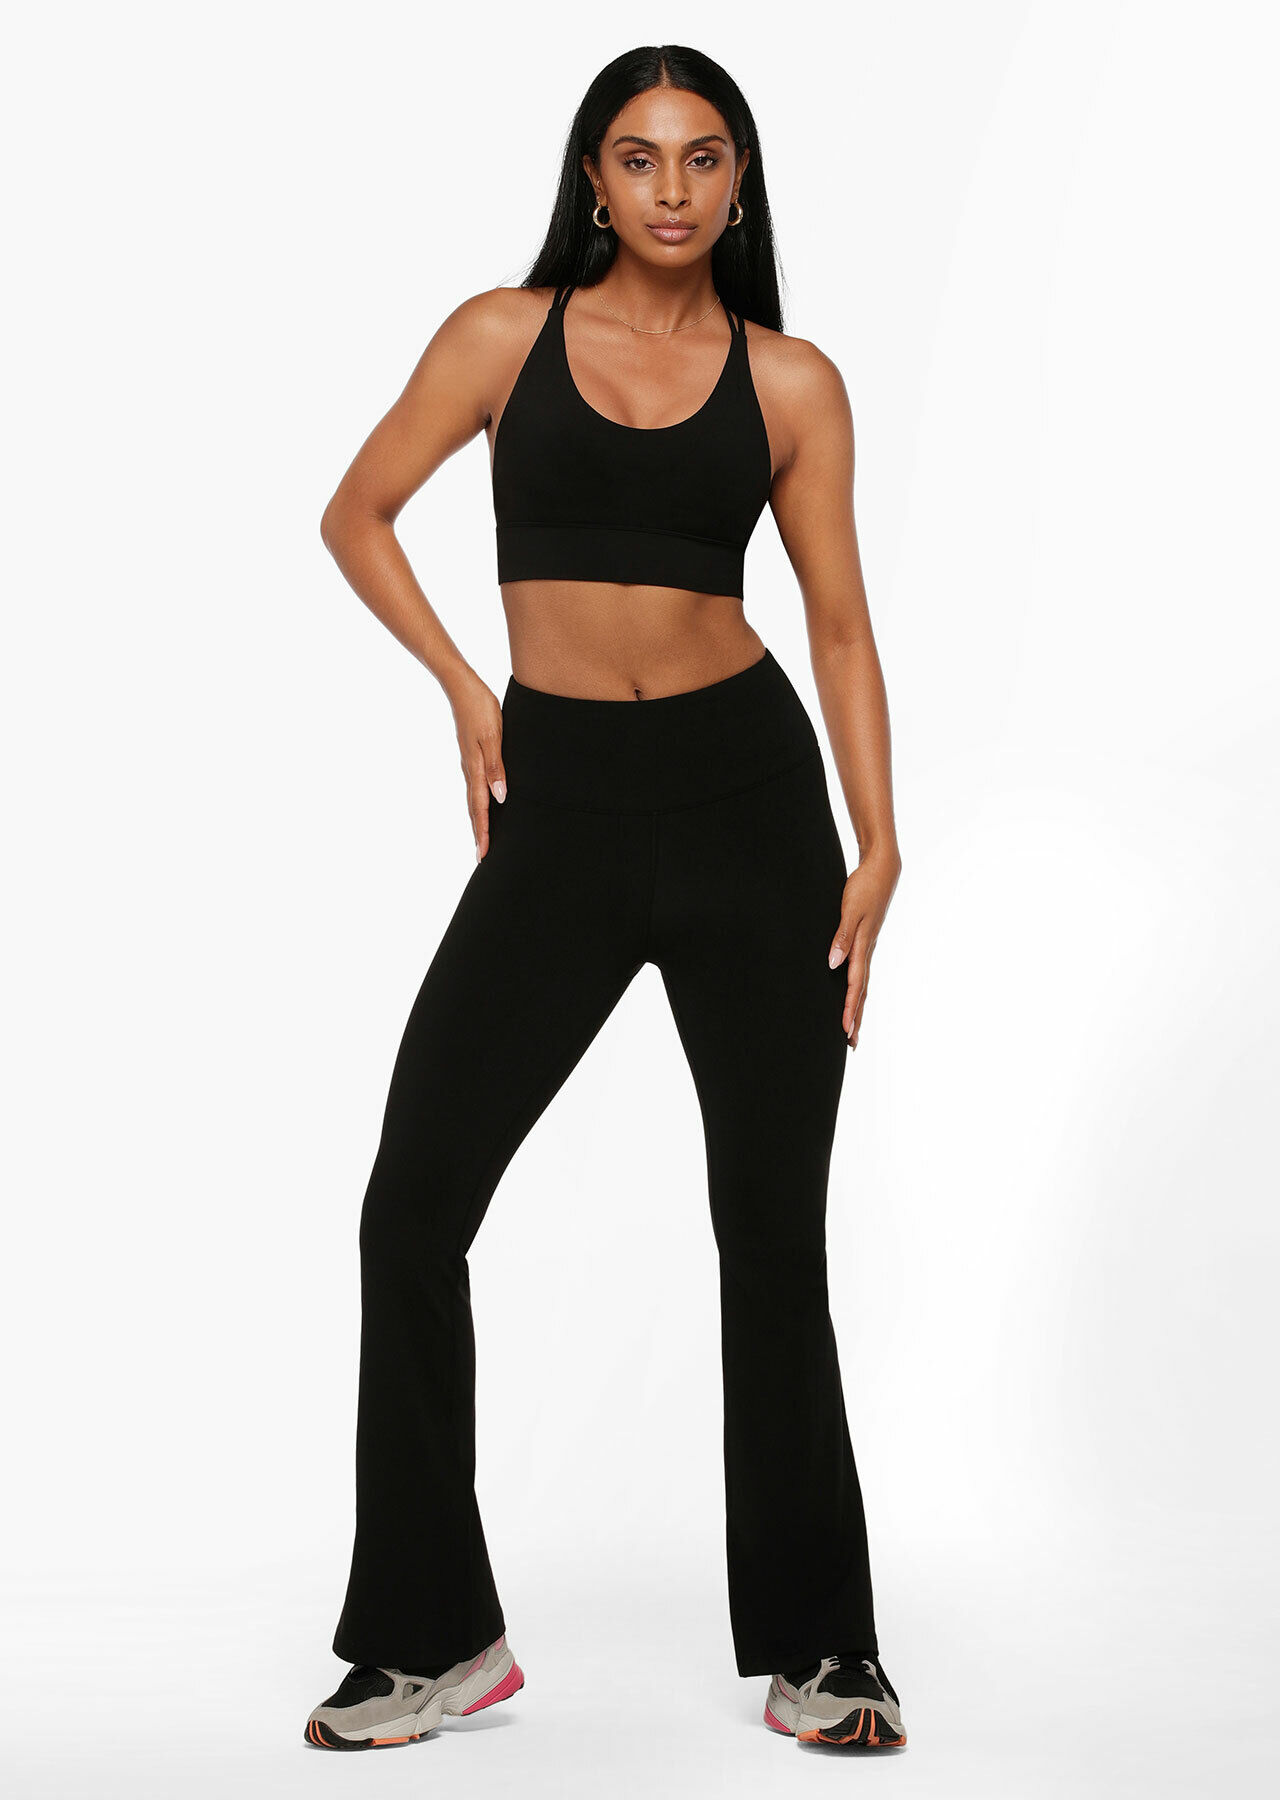 Black Yoga Pant Gym wear Mesh Leggings Workout Pants Stretchable Tights  Highwaist Sports Fitness Yoga Track